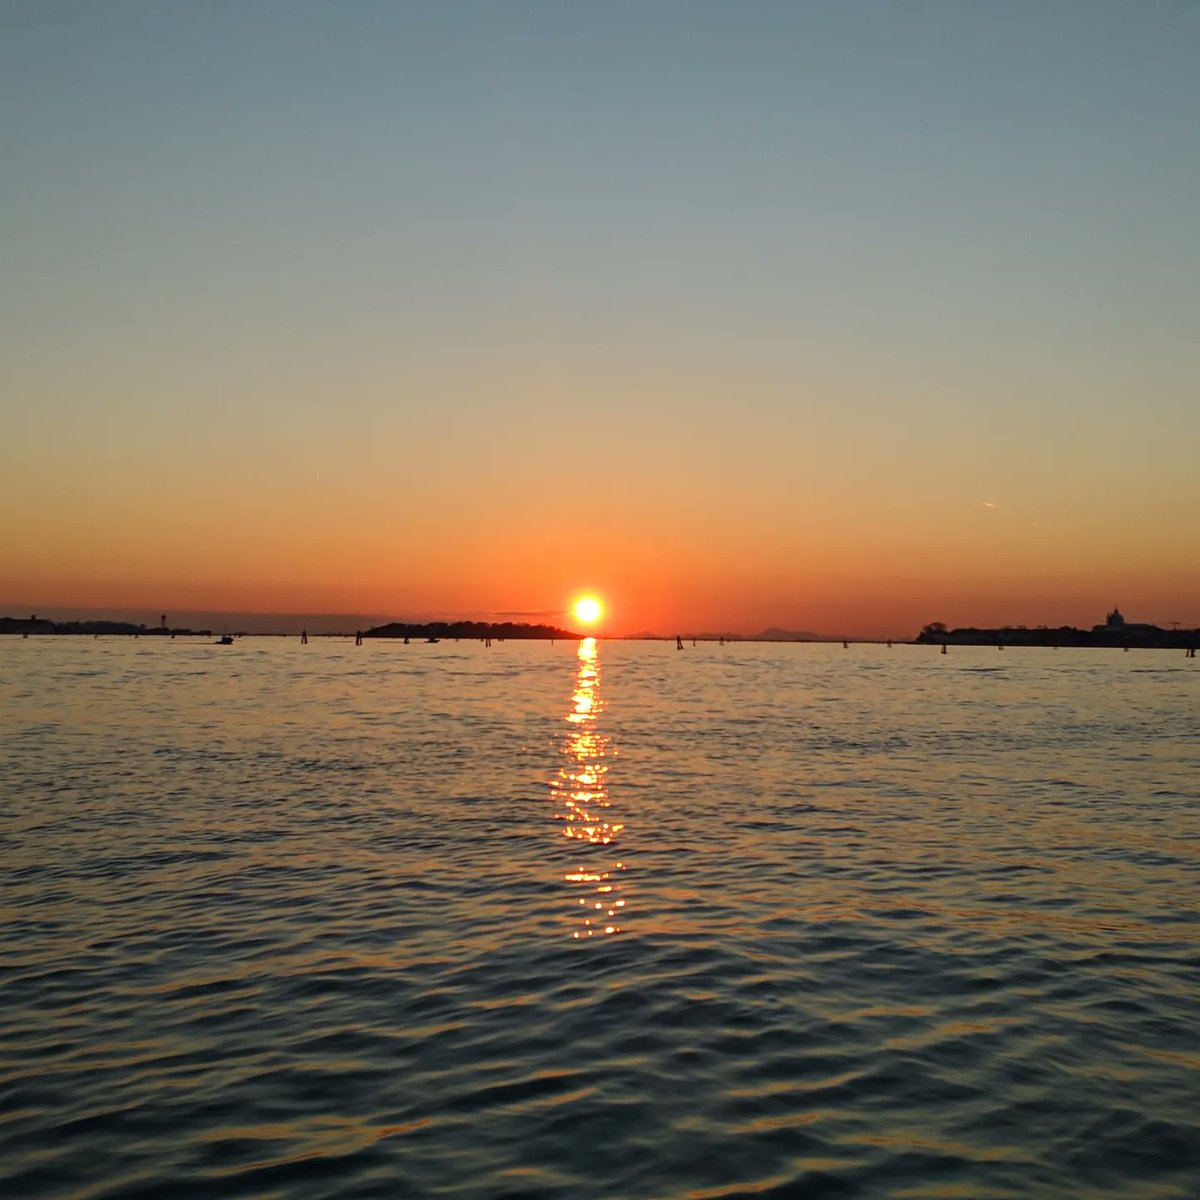 #Lagoon #Sunset from #Lido, #second try
-1...

💻 Dolomiti.Blog
📷 #Nokia8

#domani #tomorrow #demain #morgen #mañana #domenica #sunday #dimanche #sonntag #LidodiVenezia #Laguna #lagunadivenezia #Venezia #venice #venise #venedig #veneziaserenissima #tramonto